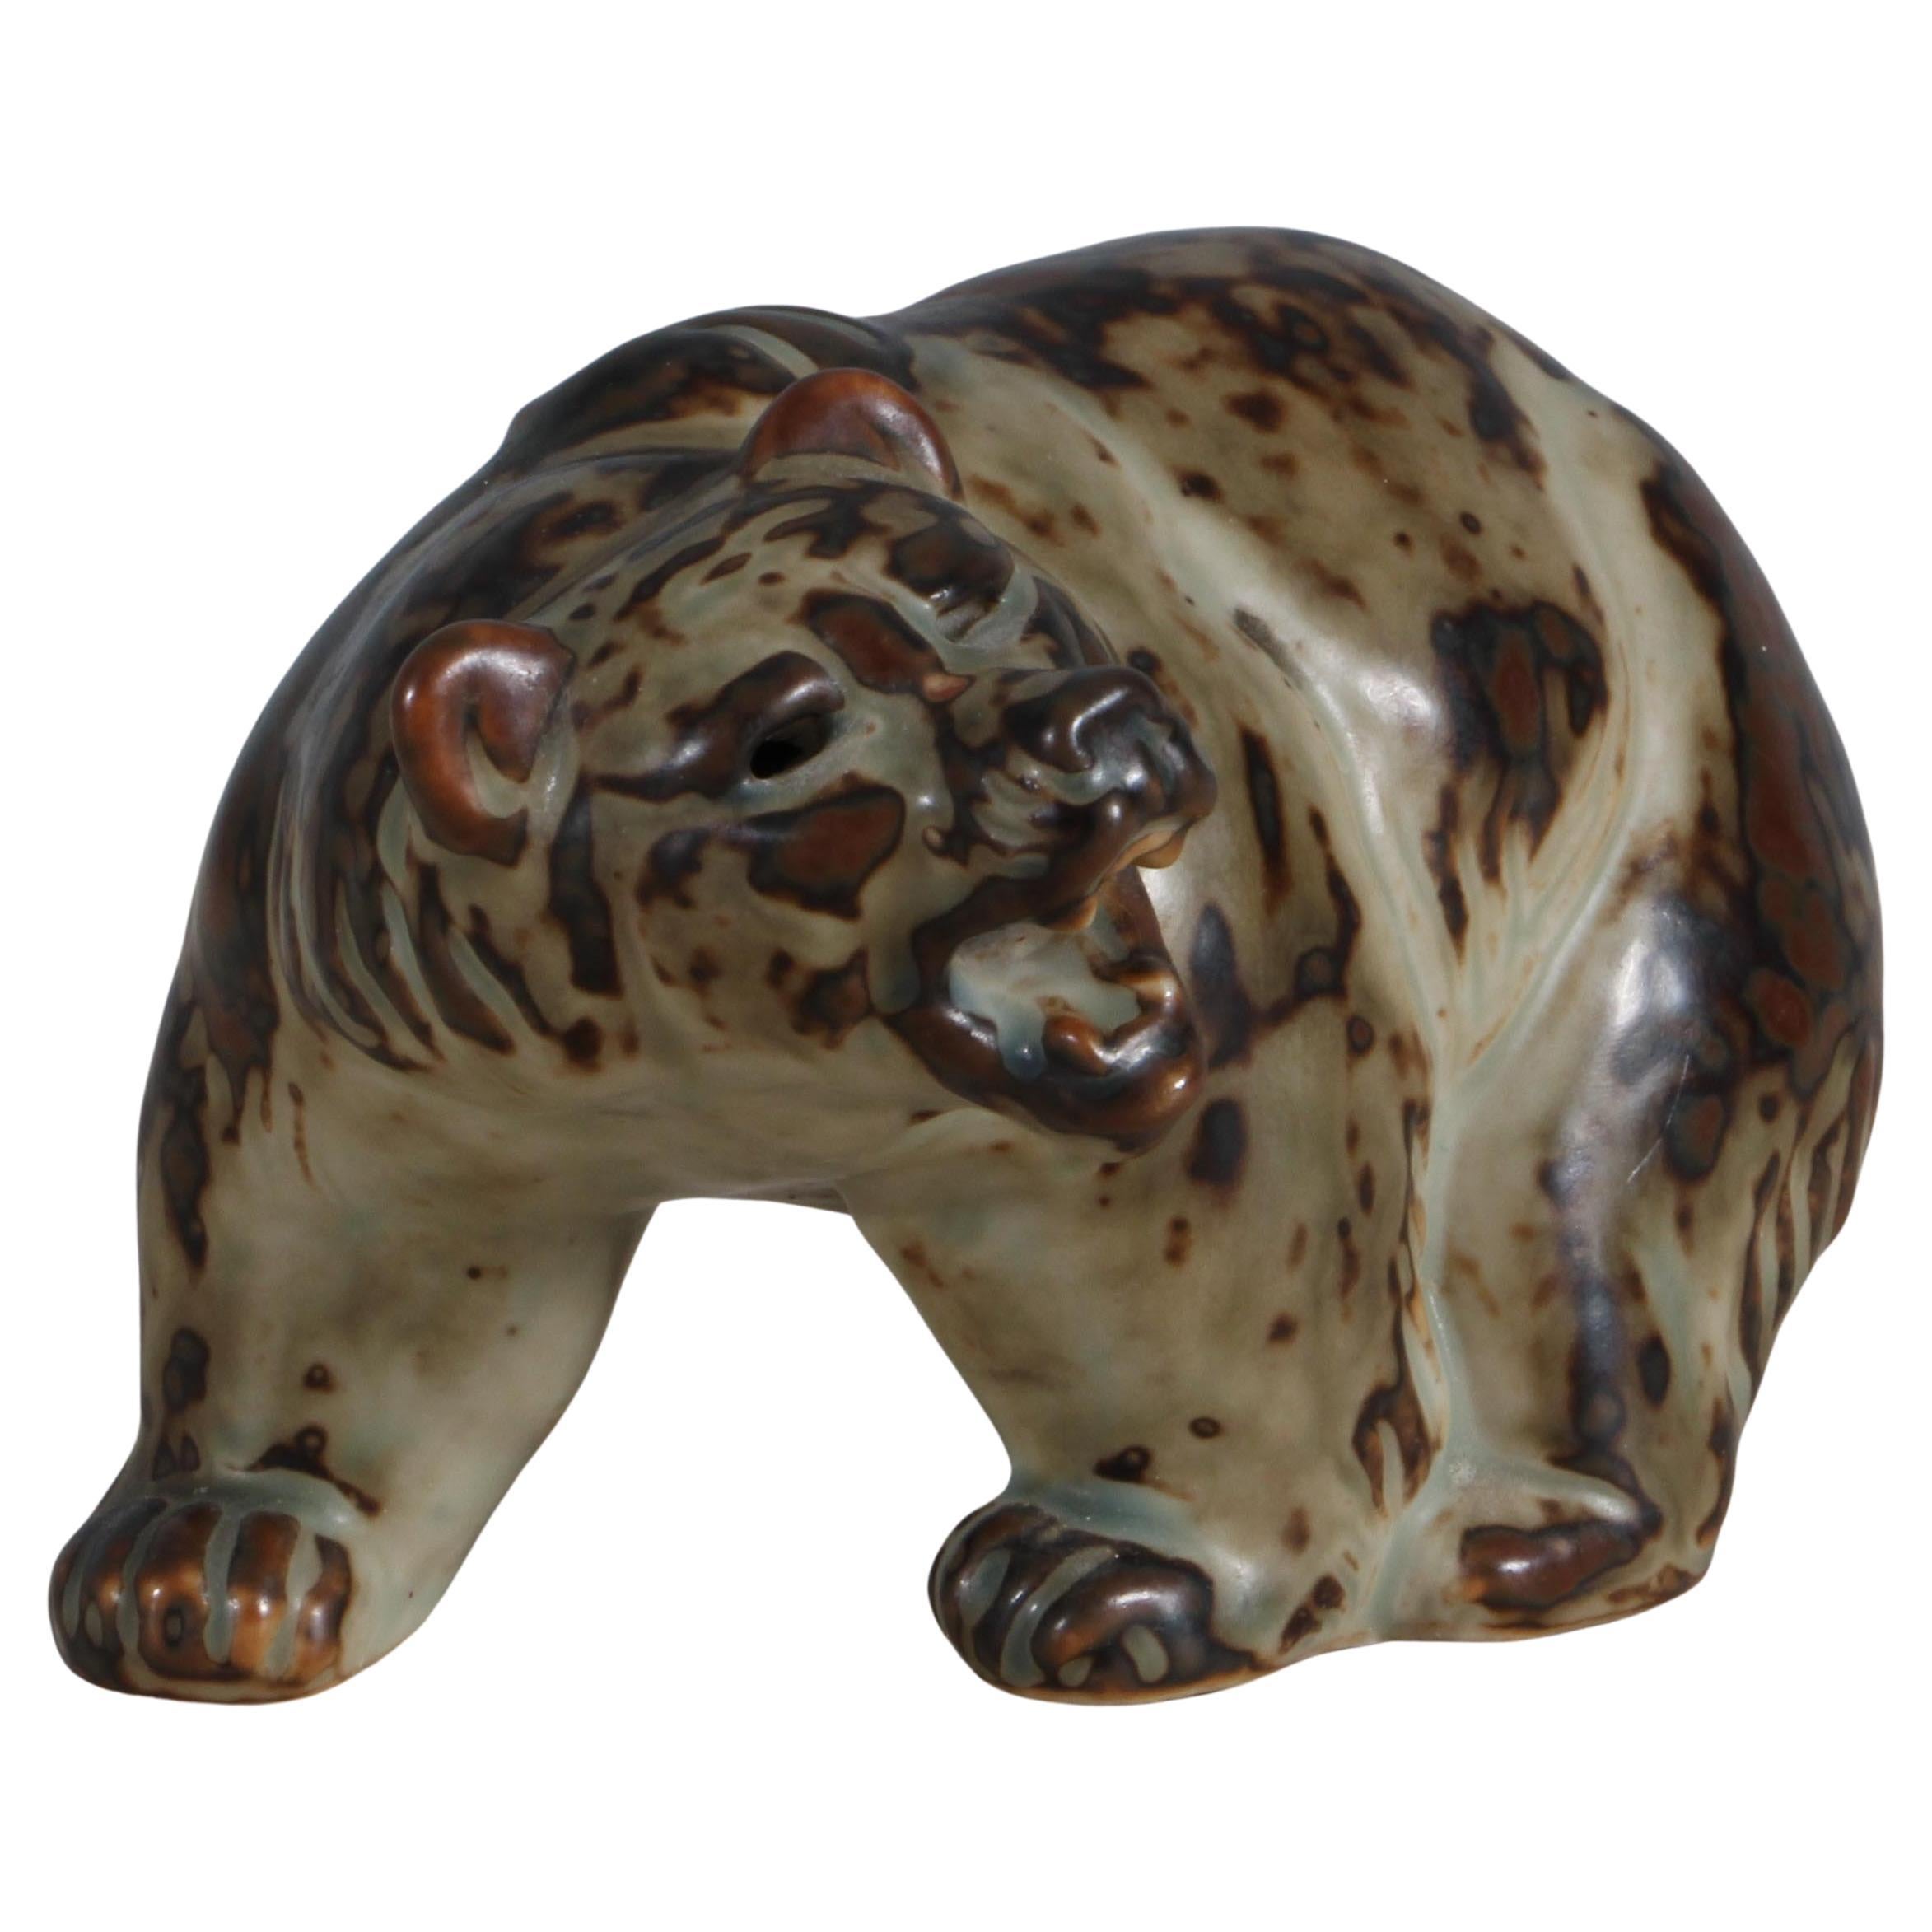 Glazed Stoneware Bear Figurine, Knud Kyhn for Royal Copenhagen #20179